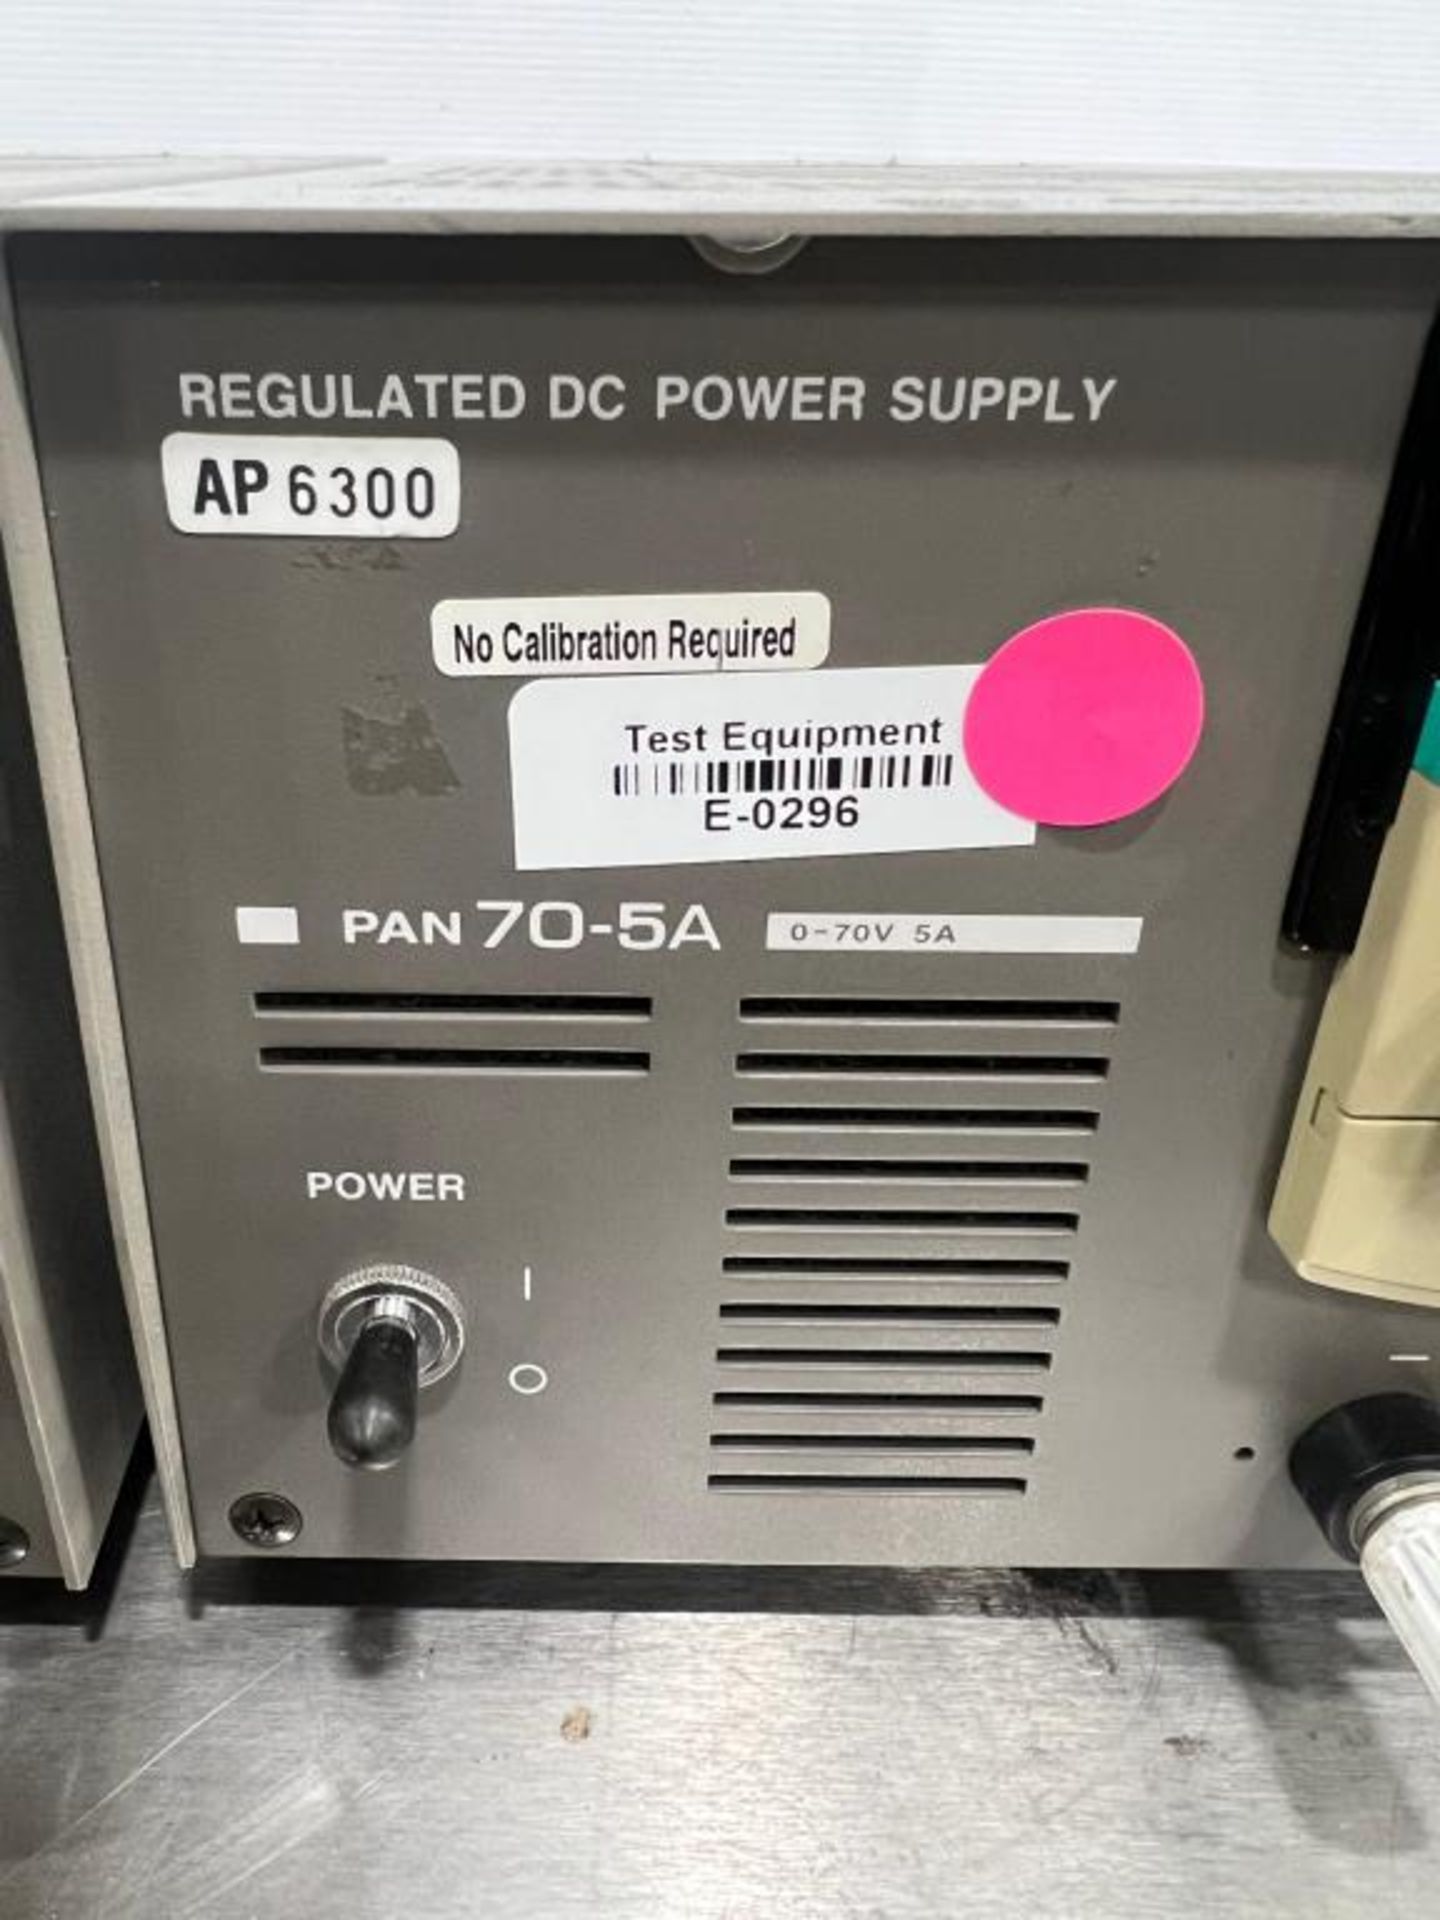 Kikusui DC Regulated Power Supplies - Image 3 of 3